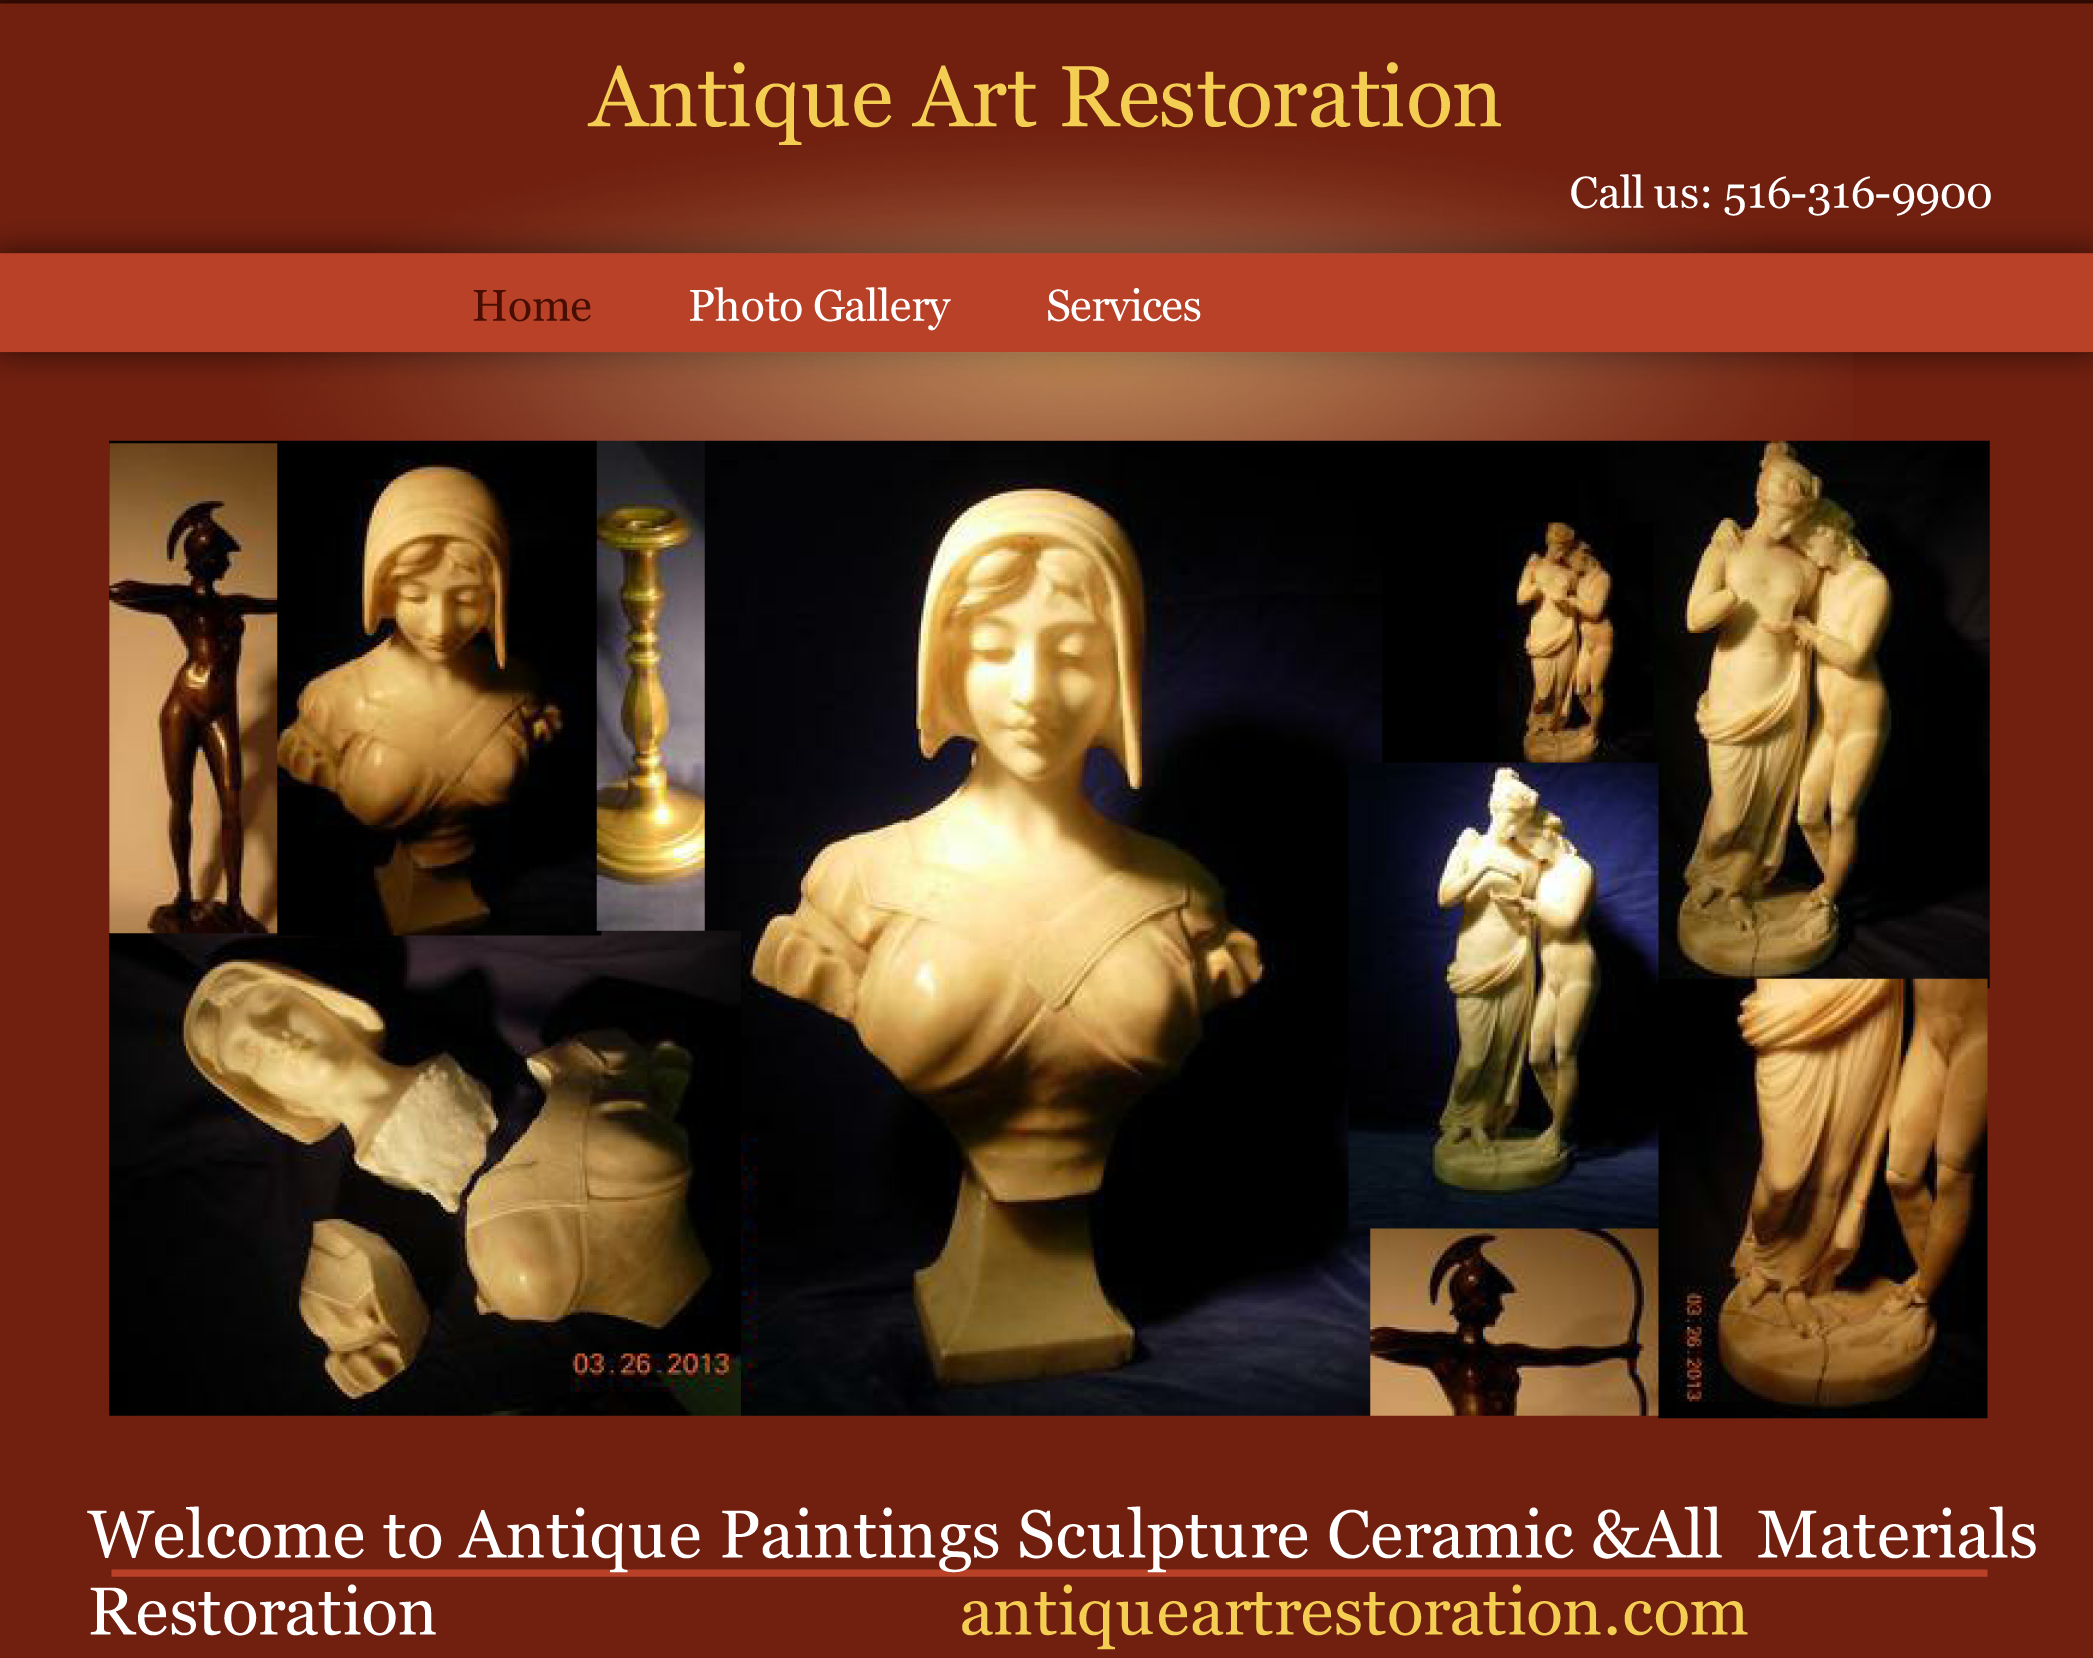 Antique Paintings Sculpture Ceramic and All Materials Restorations Photo